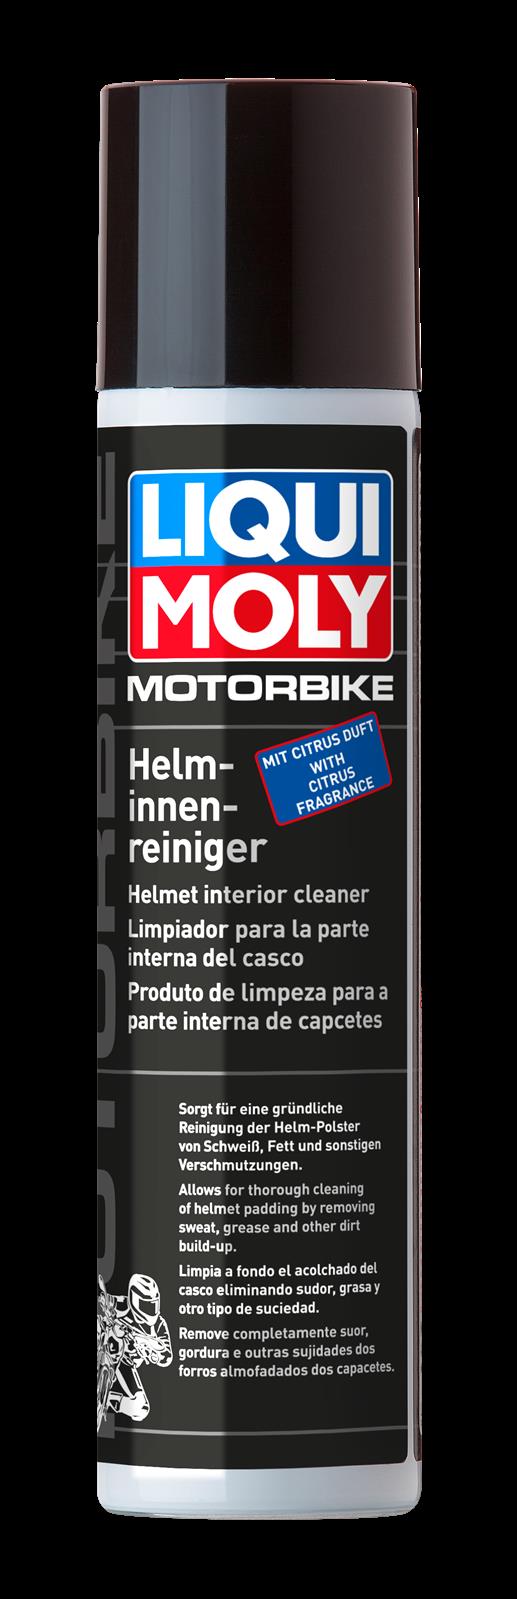 LIQUI MOLY Motorbike Helminnenreiniger 300ml